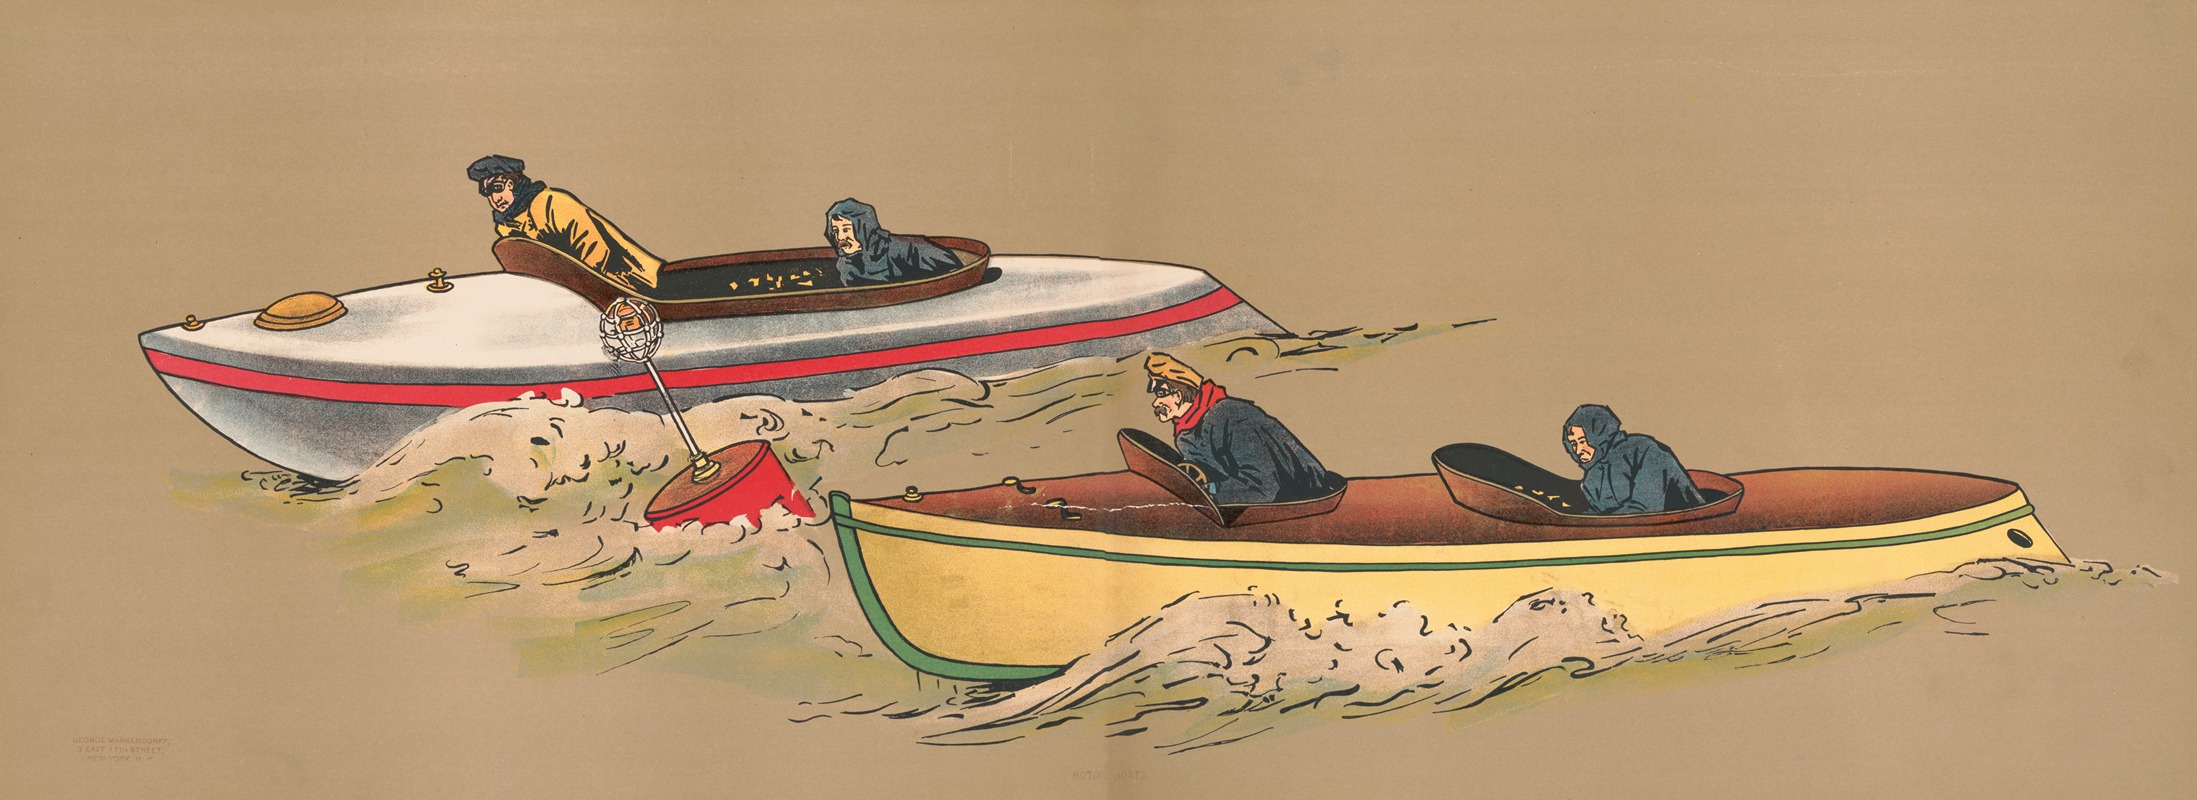 George Markendorff - Motor Boats